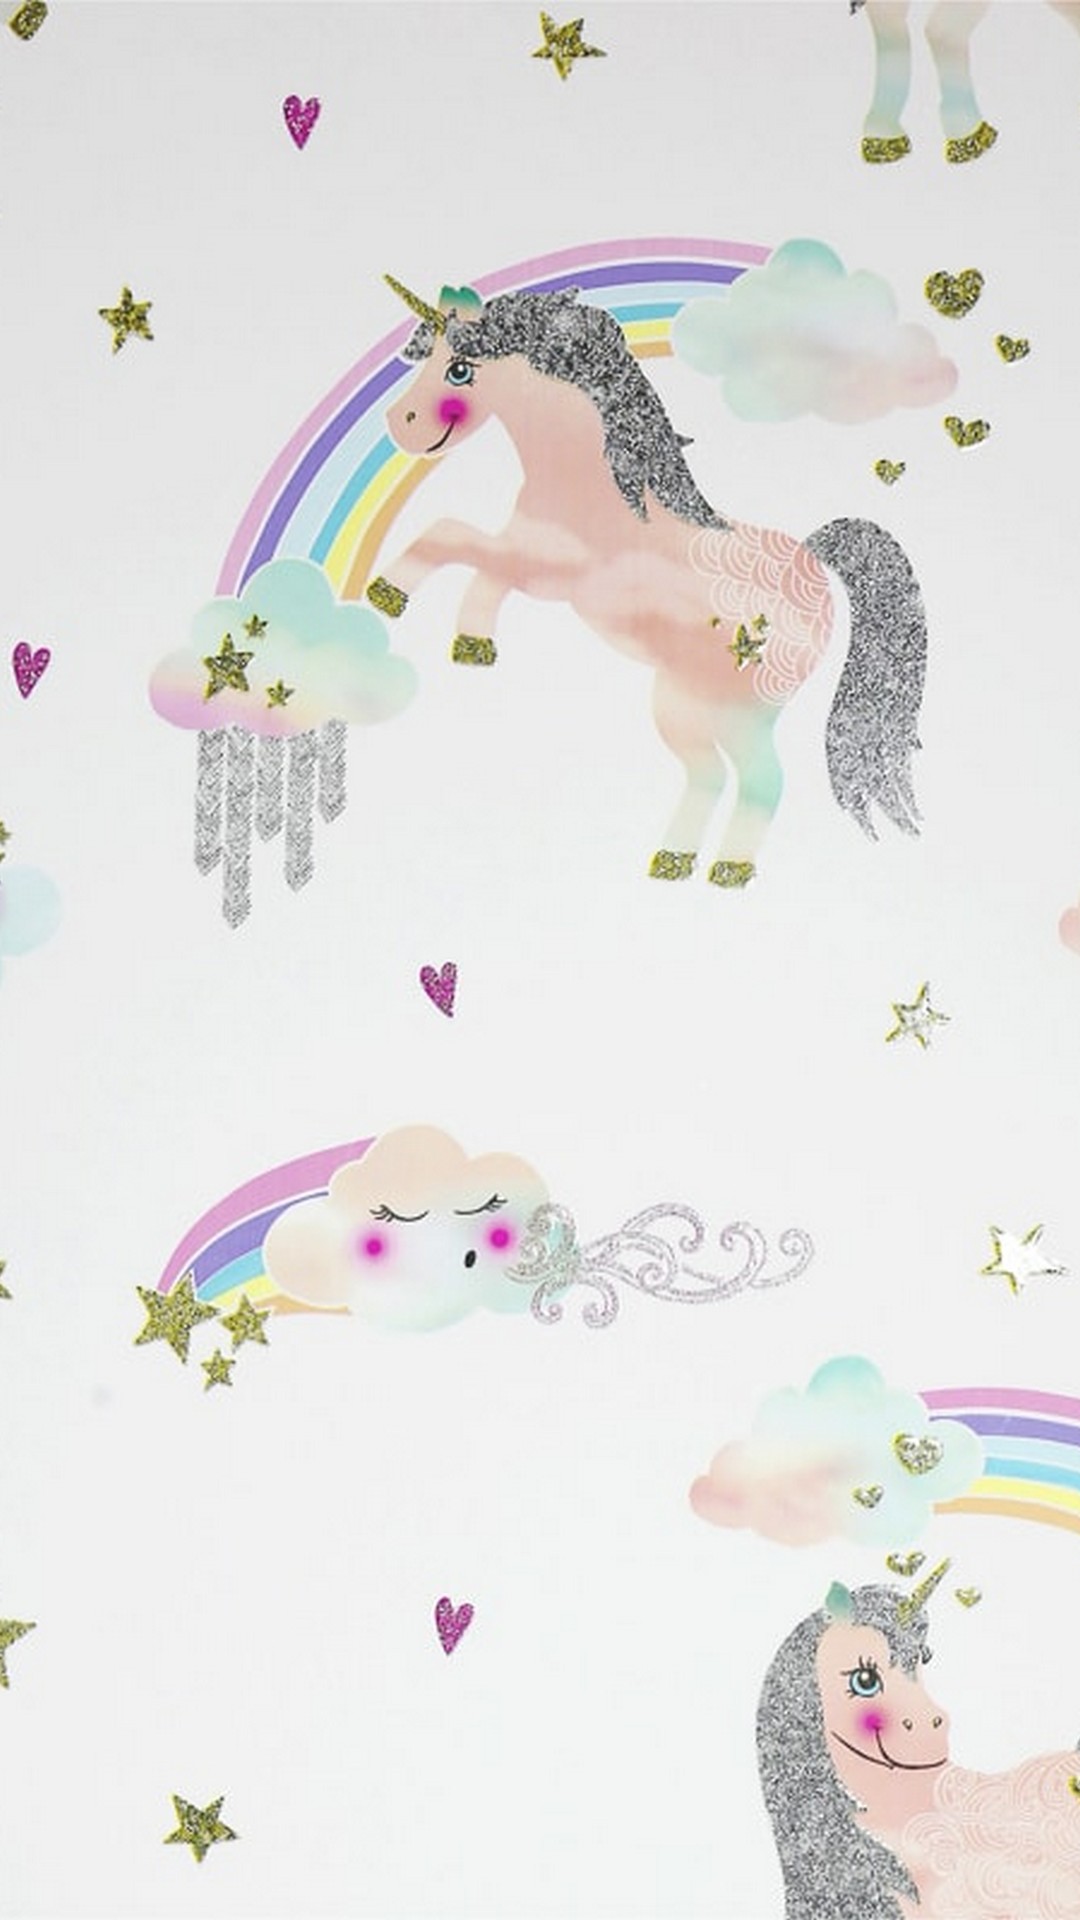 Iphone Wallpaper Hd Cute Girly Unicorn 2020 3d Iphone Wallpaper